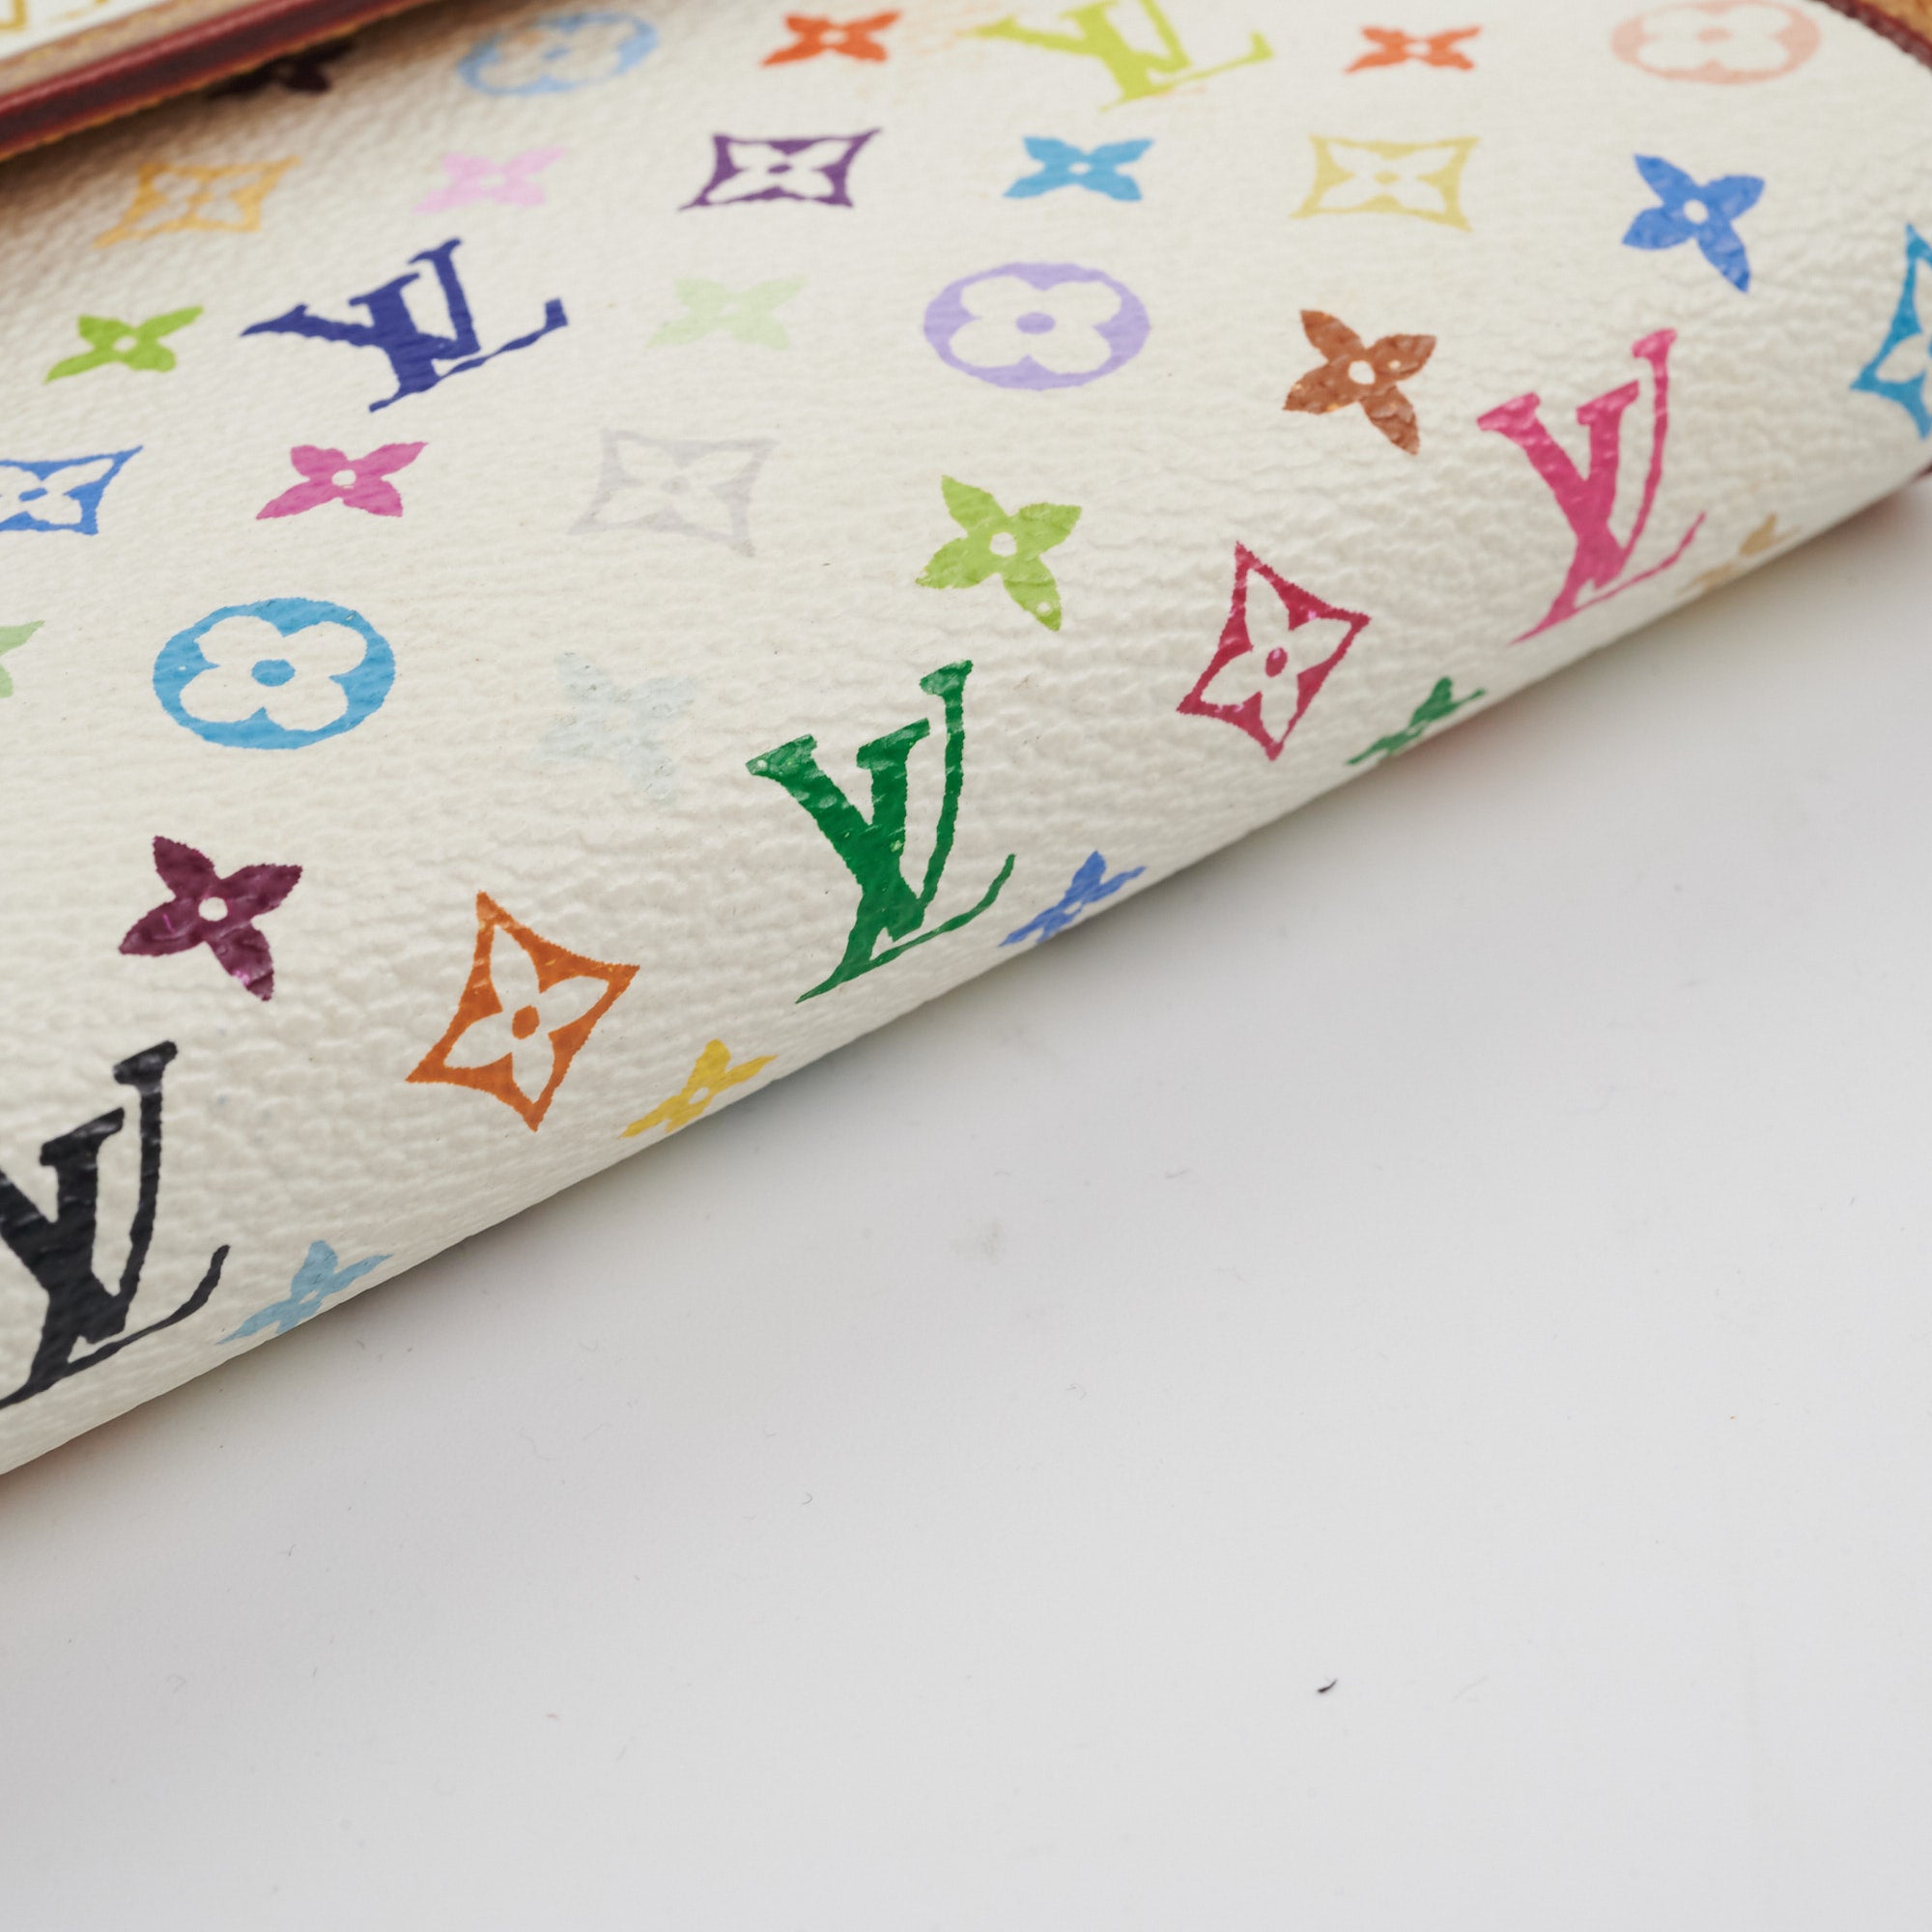 Cloth wallet Louis Vuitton Multicolour in Cloth - 27476018